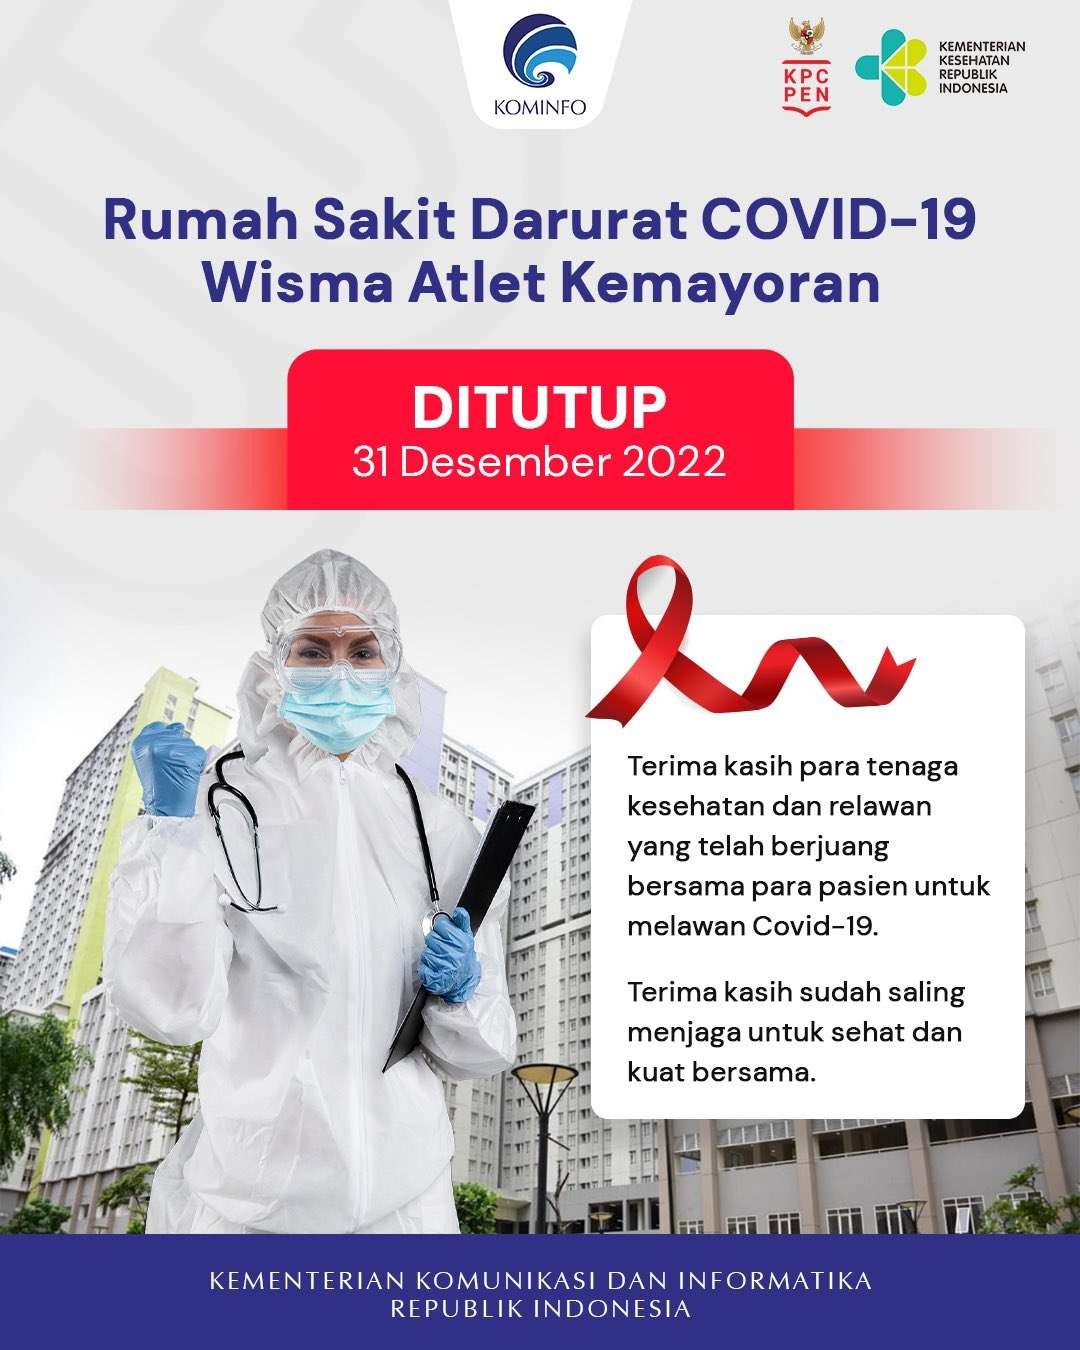 Rumah Sakit Darurat COVID-19 Wisma Atlet Jakarta resmi ditutup, Sabtu 31 Desember 2022. (Foto: Twitter @kominfo)